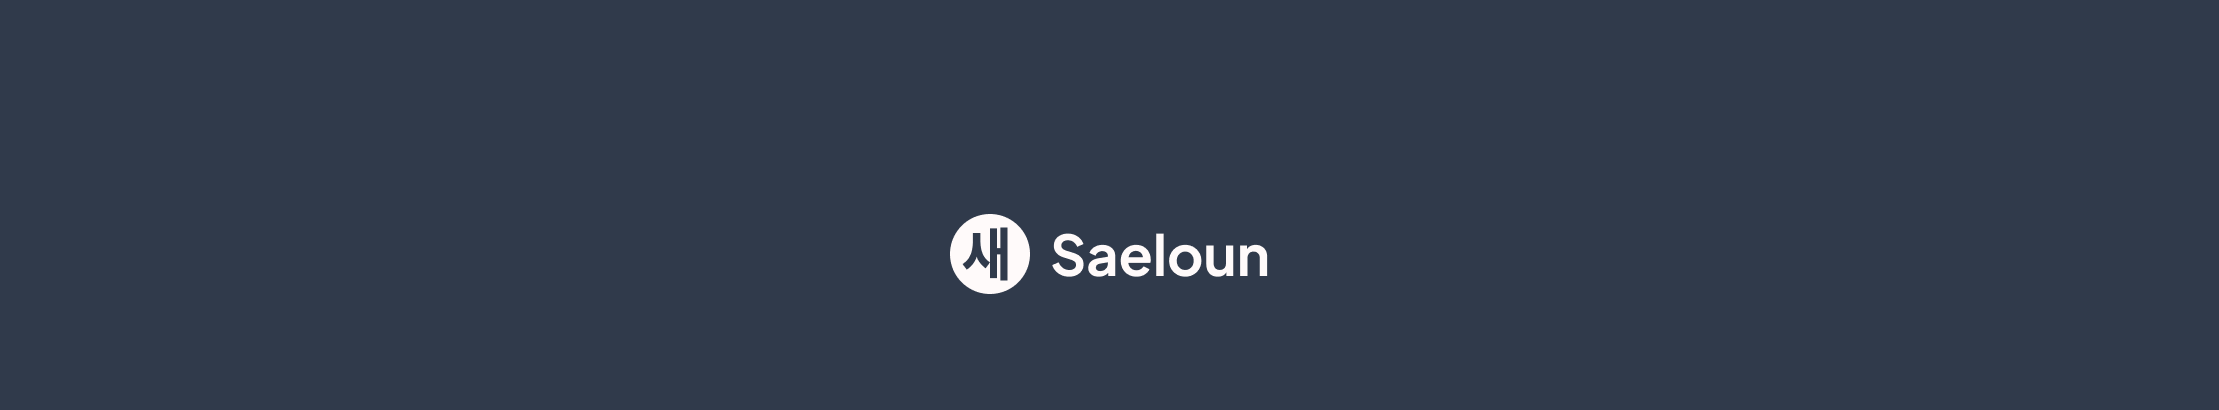 Saeloun Technologies's profile banner